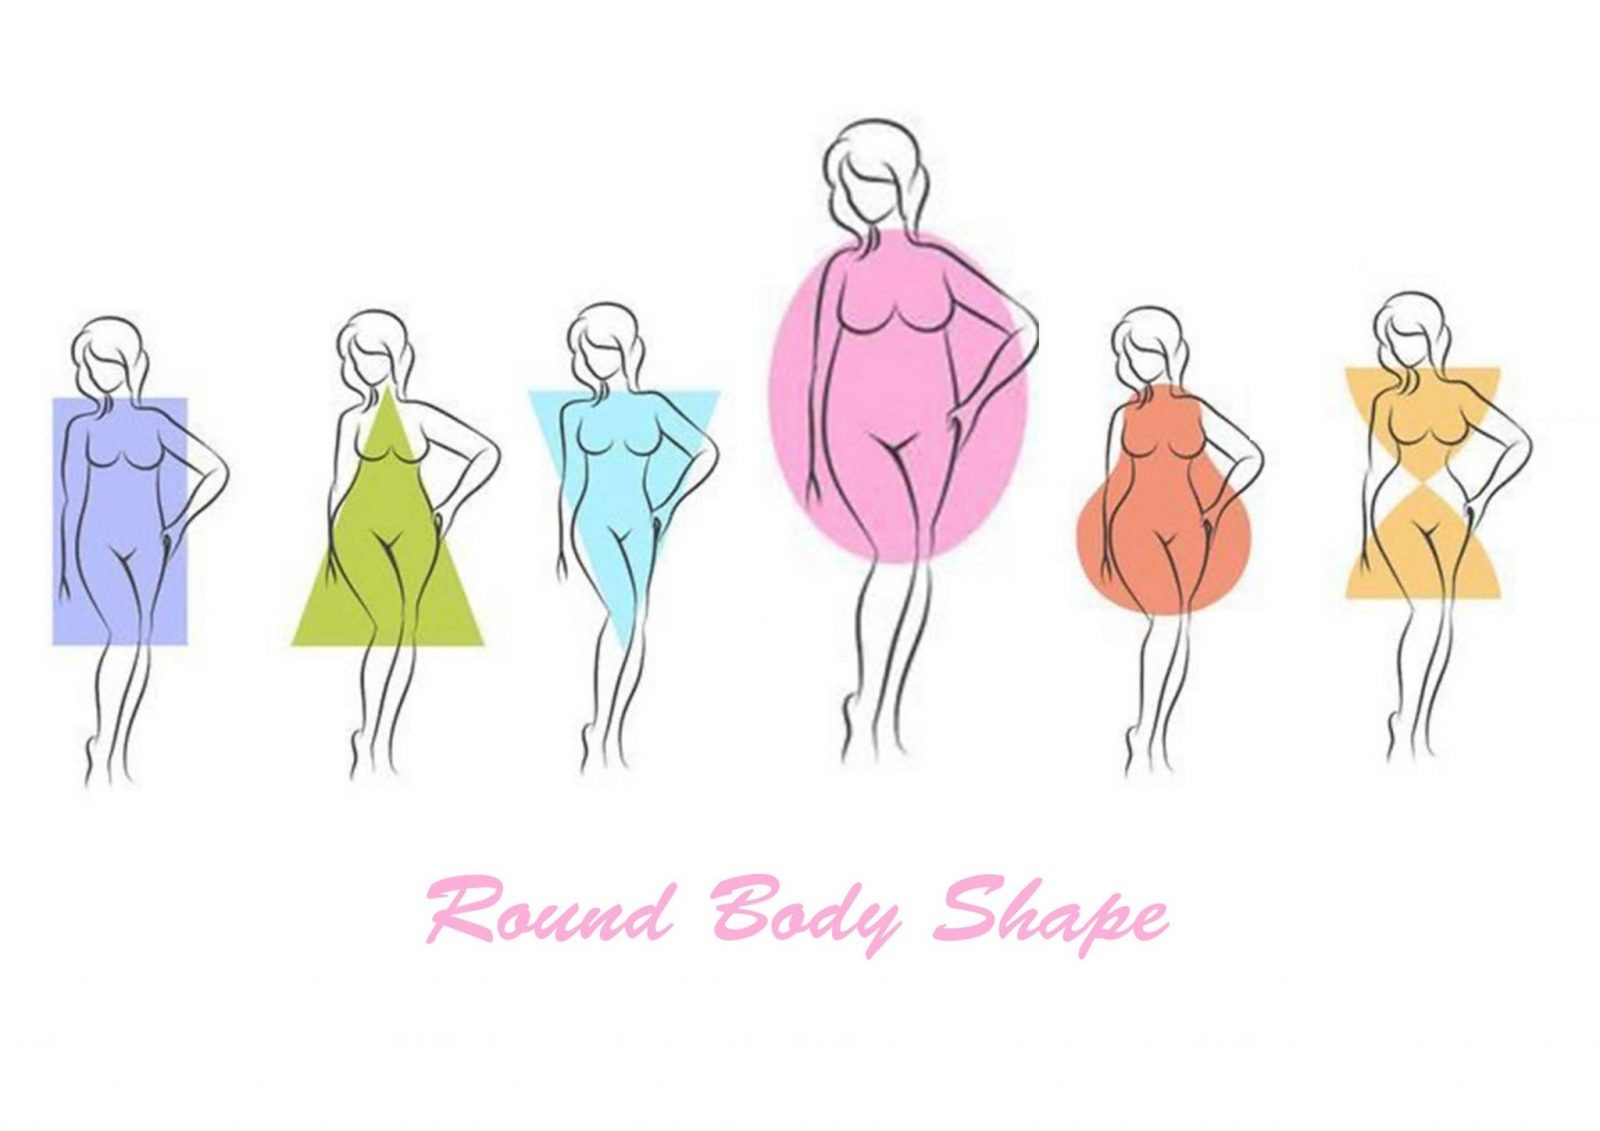 https://www.fashionactivation.com/wp-content/uploads/2021/05/round_body_shape-min-scaled.jpg